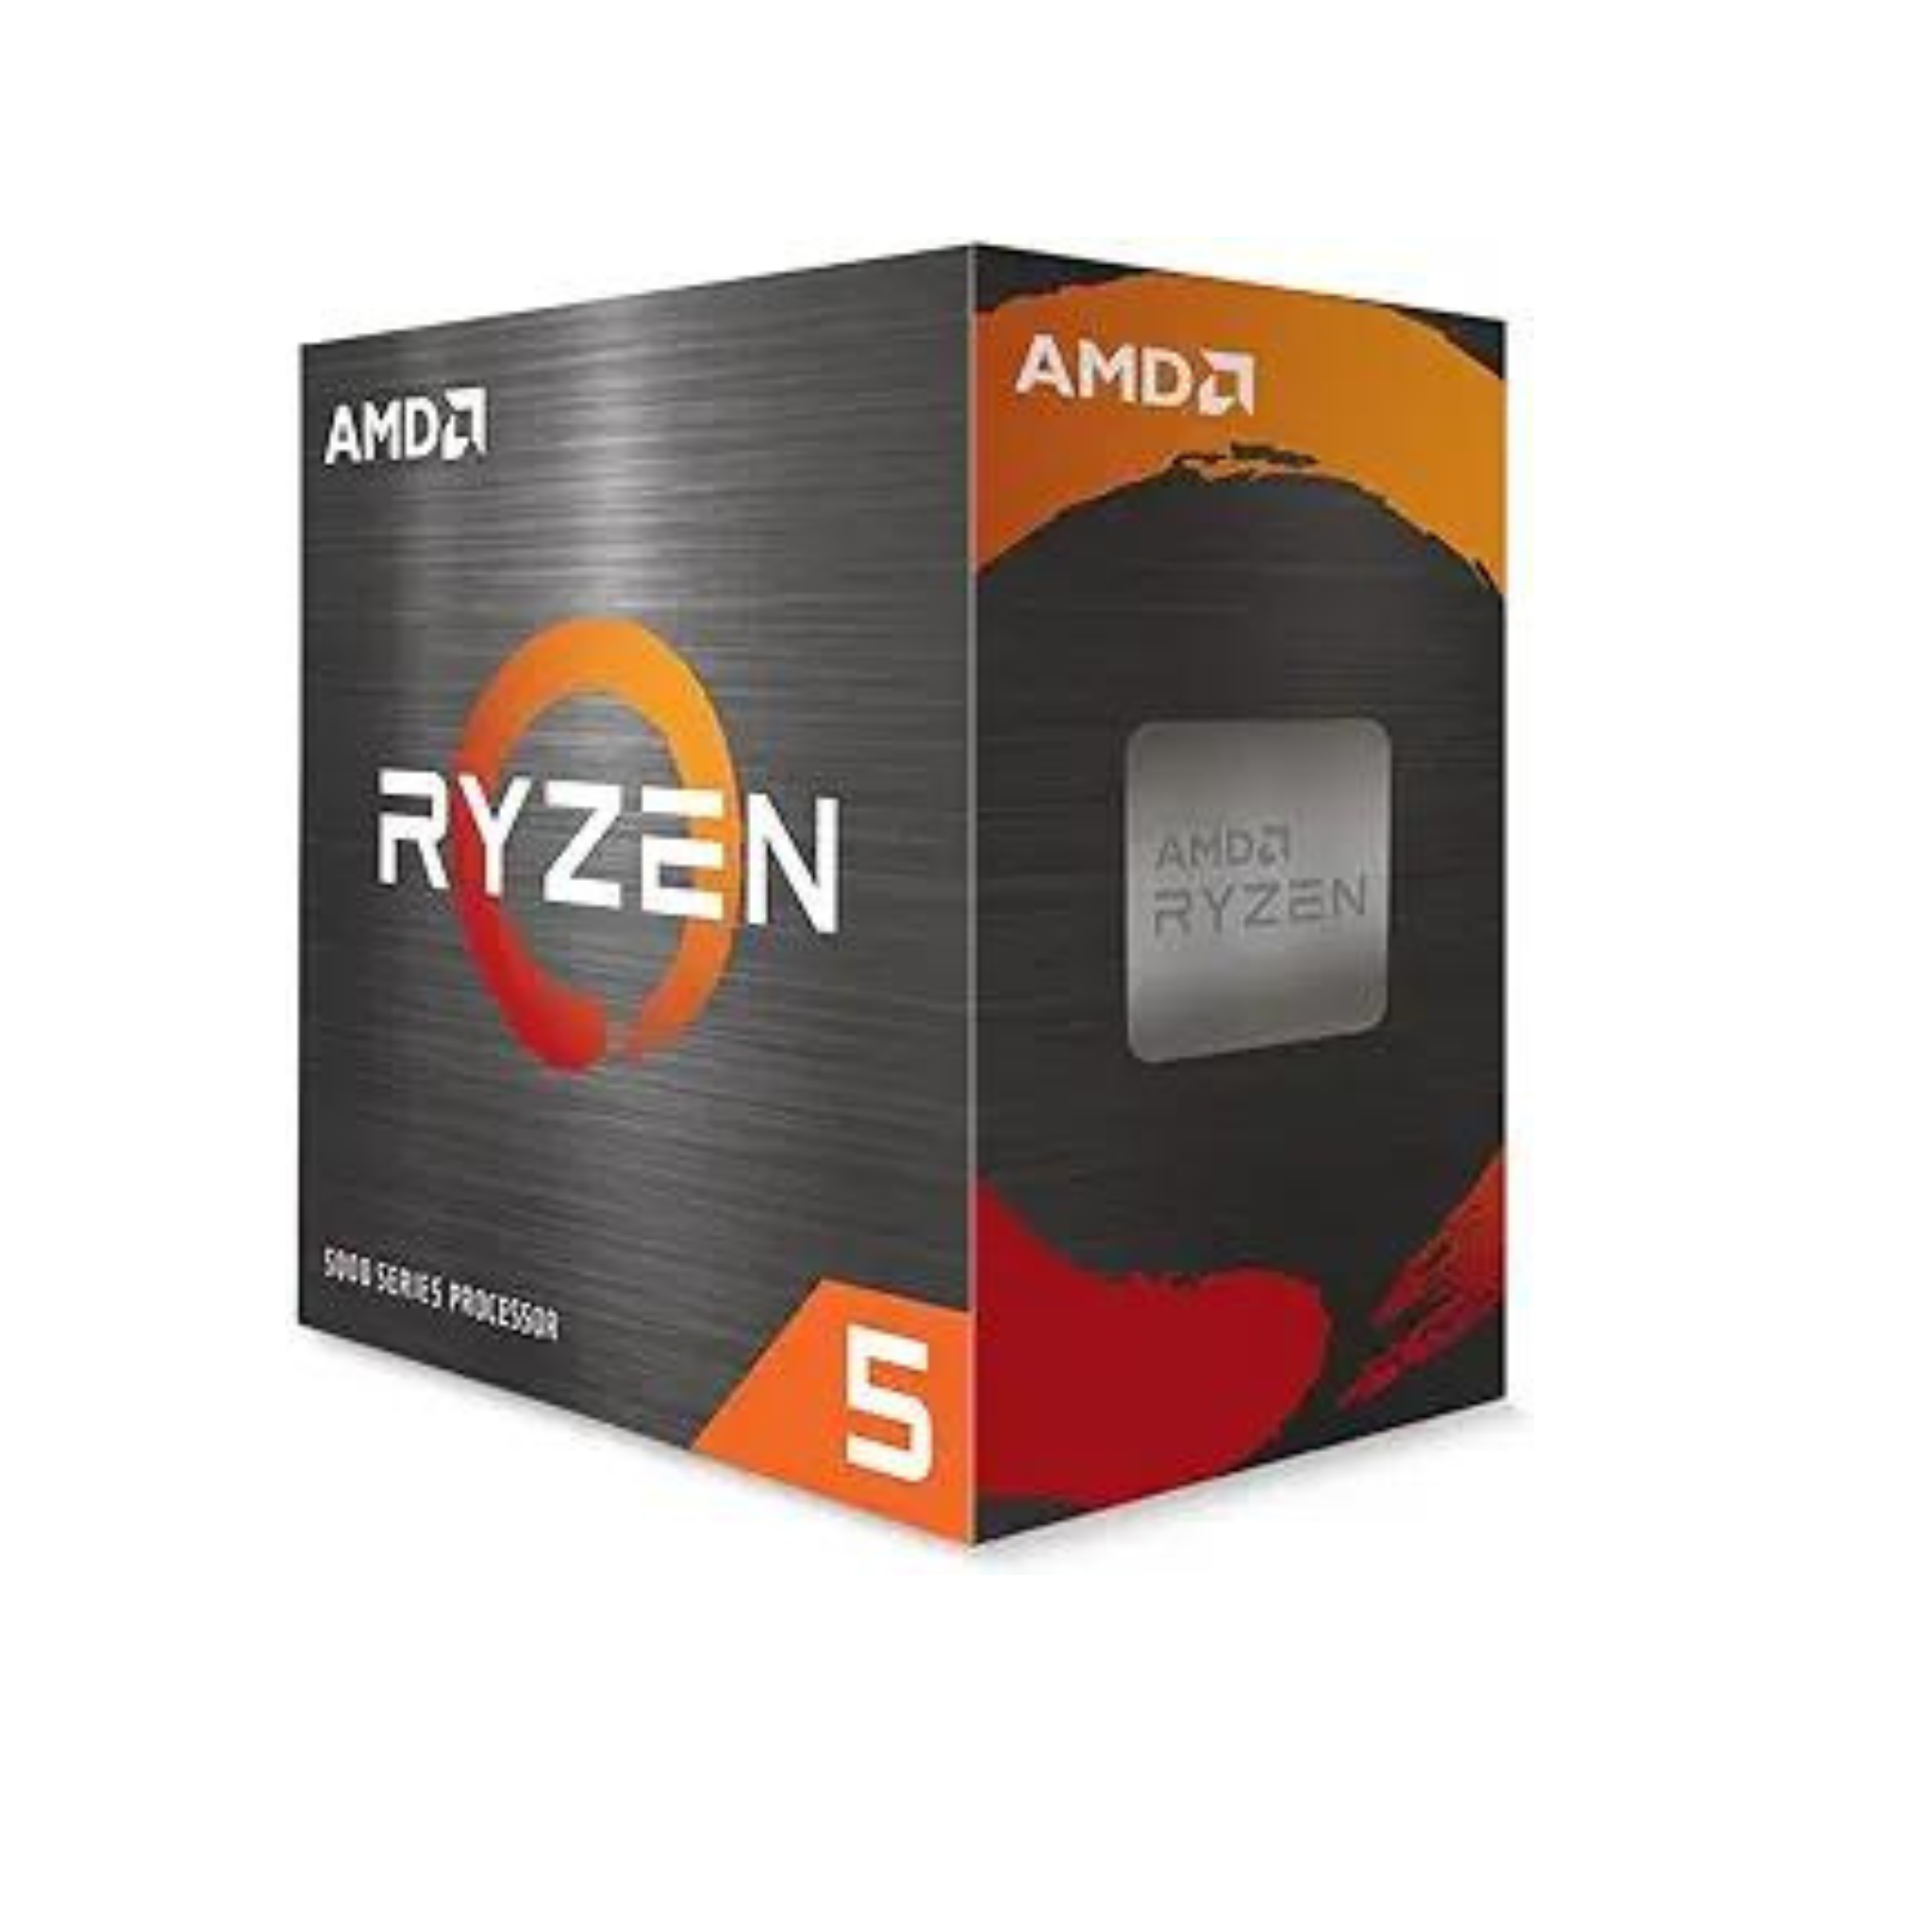 AMD Ryzen 5 5500 6-Core 12-Thread Desktop AM4 Processor w/ Wraith Stealth Cooler